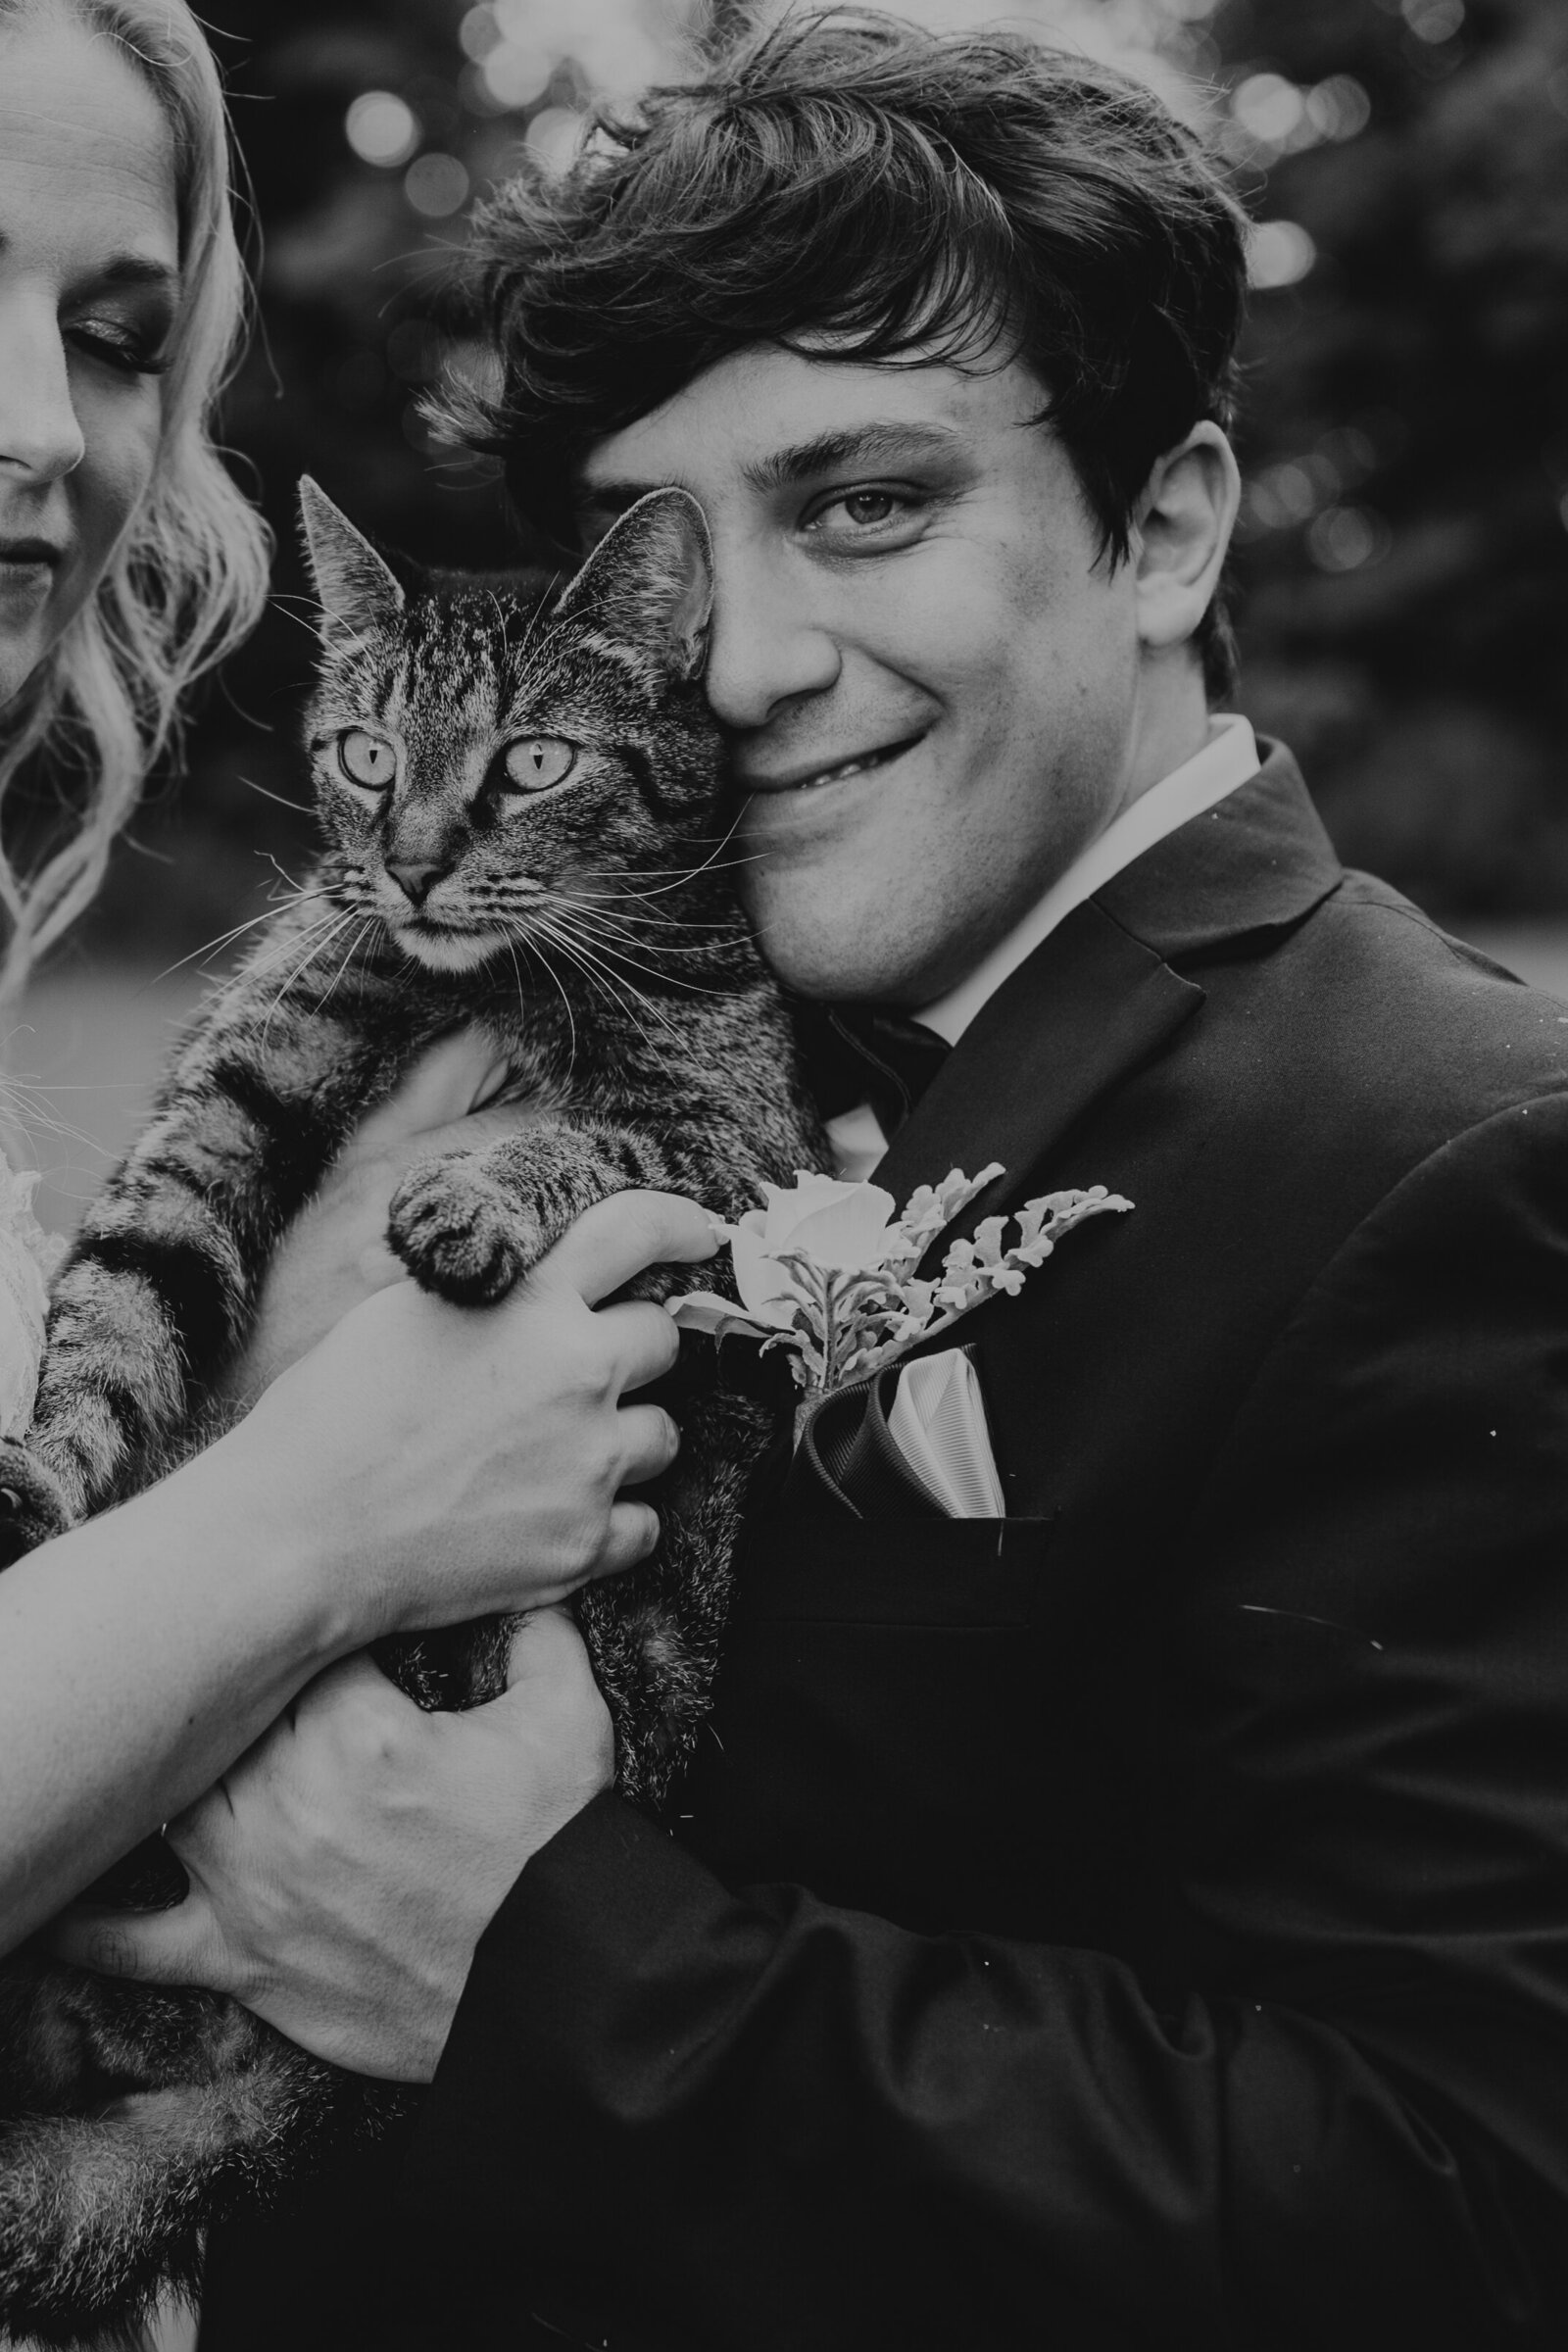 Wedding Cat